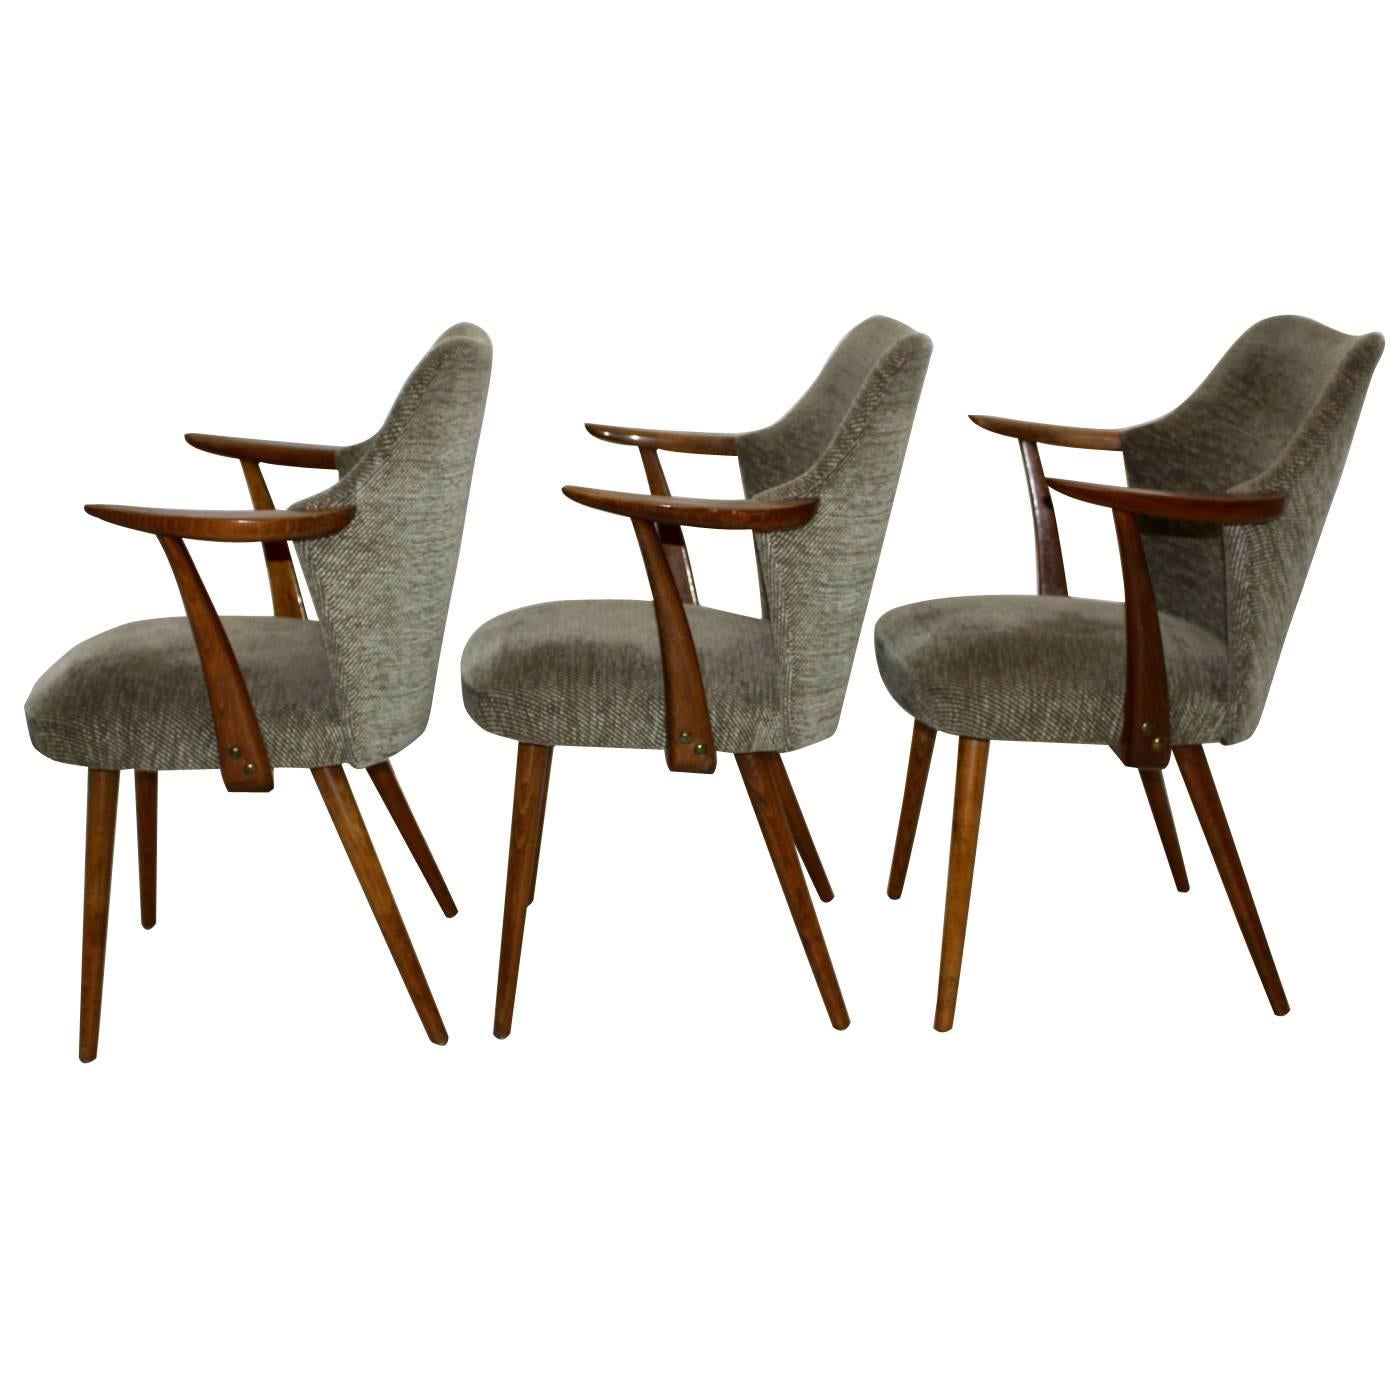 Moderner Sessel aus Buchenholz, Mid-Century Modern, Oswald Haerdtl zugeschrieben 1950er Jahre